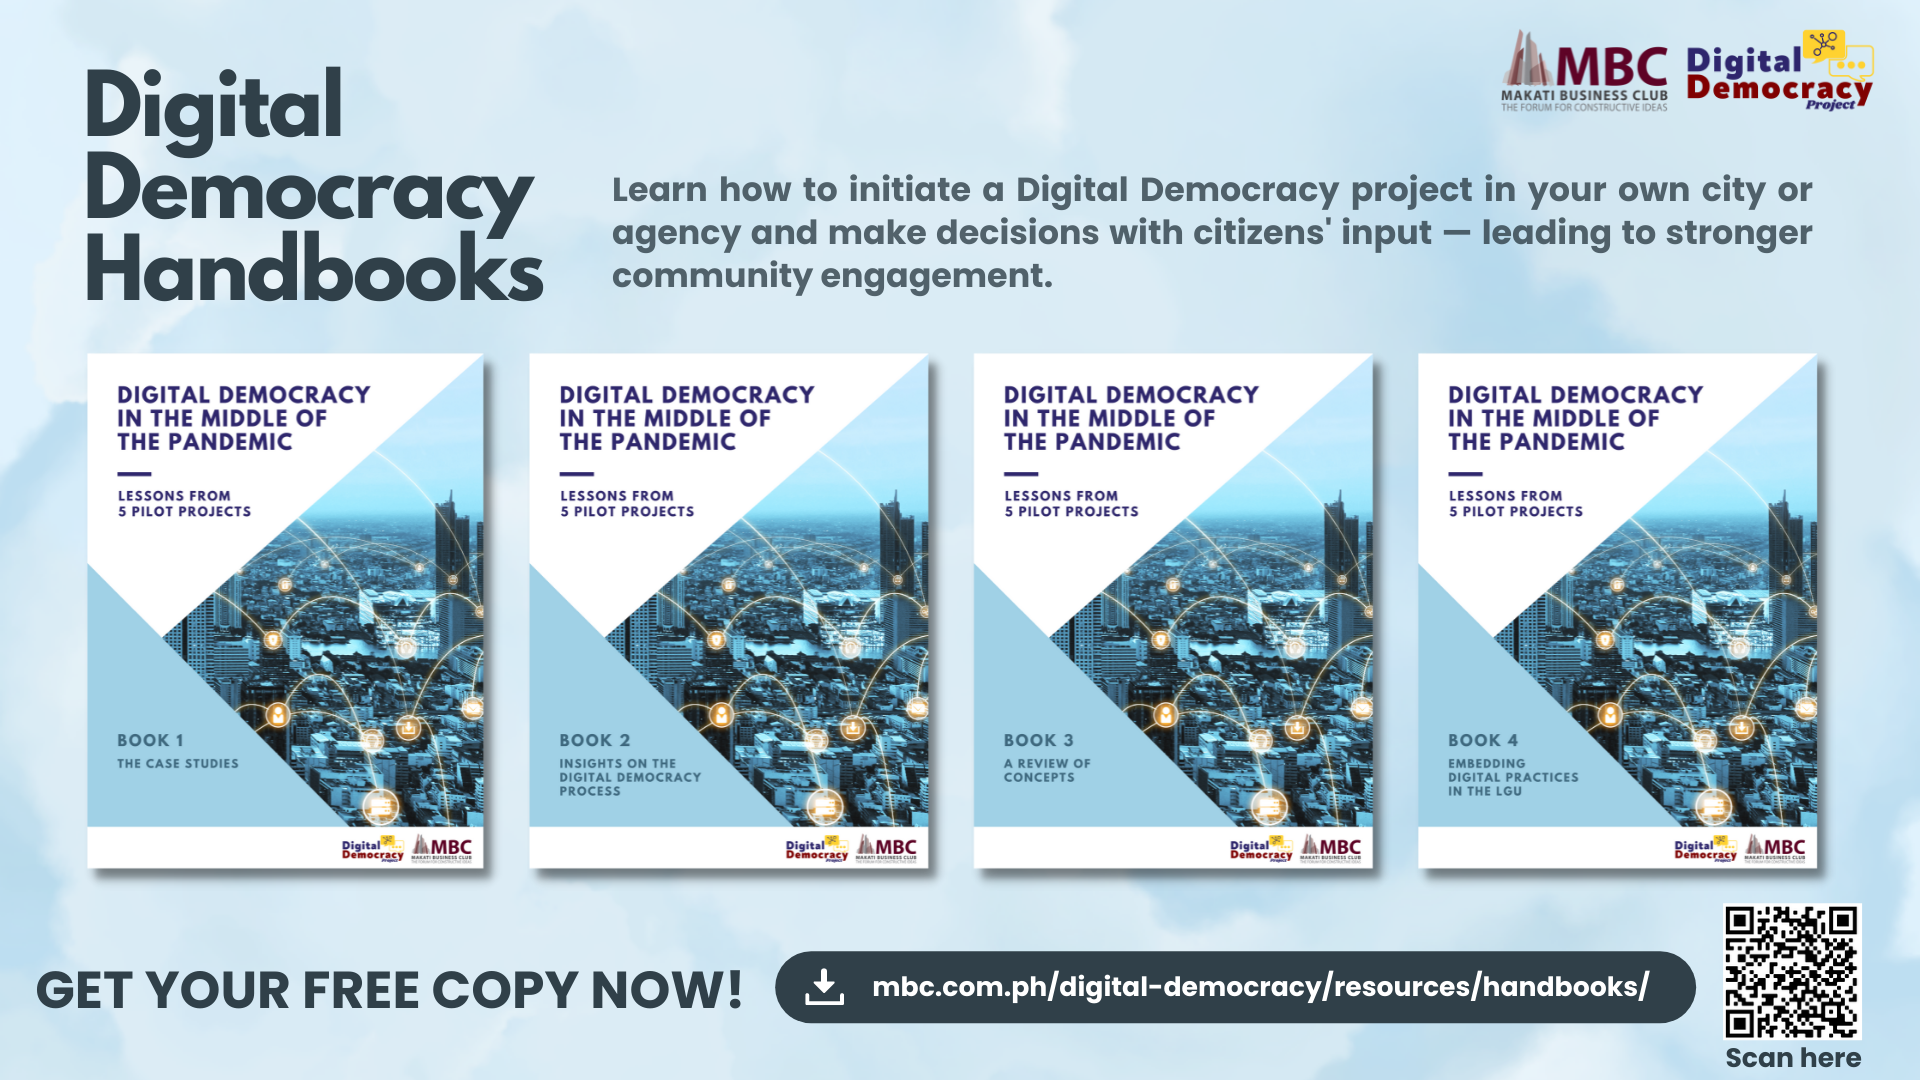 MBC's Digital Democracy Handbooks